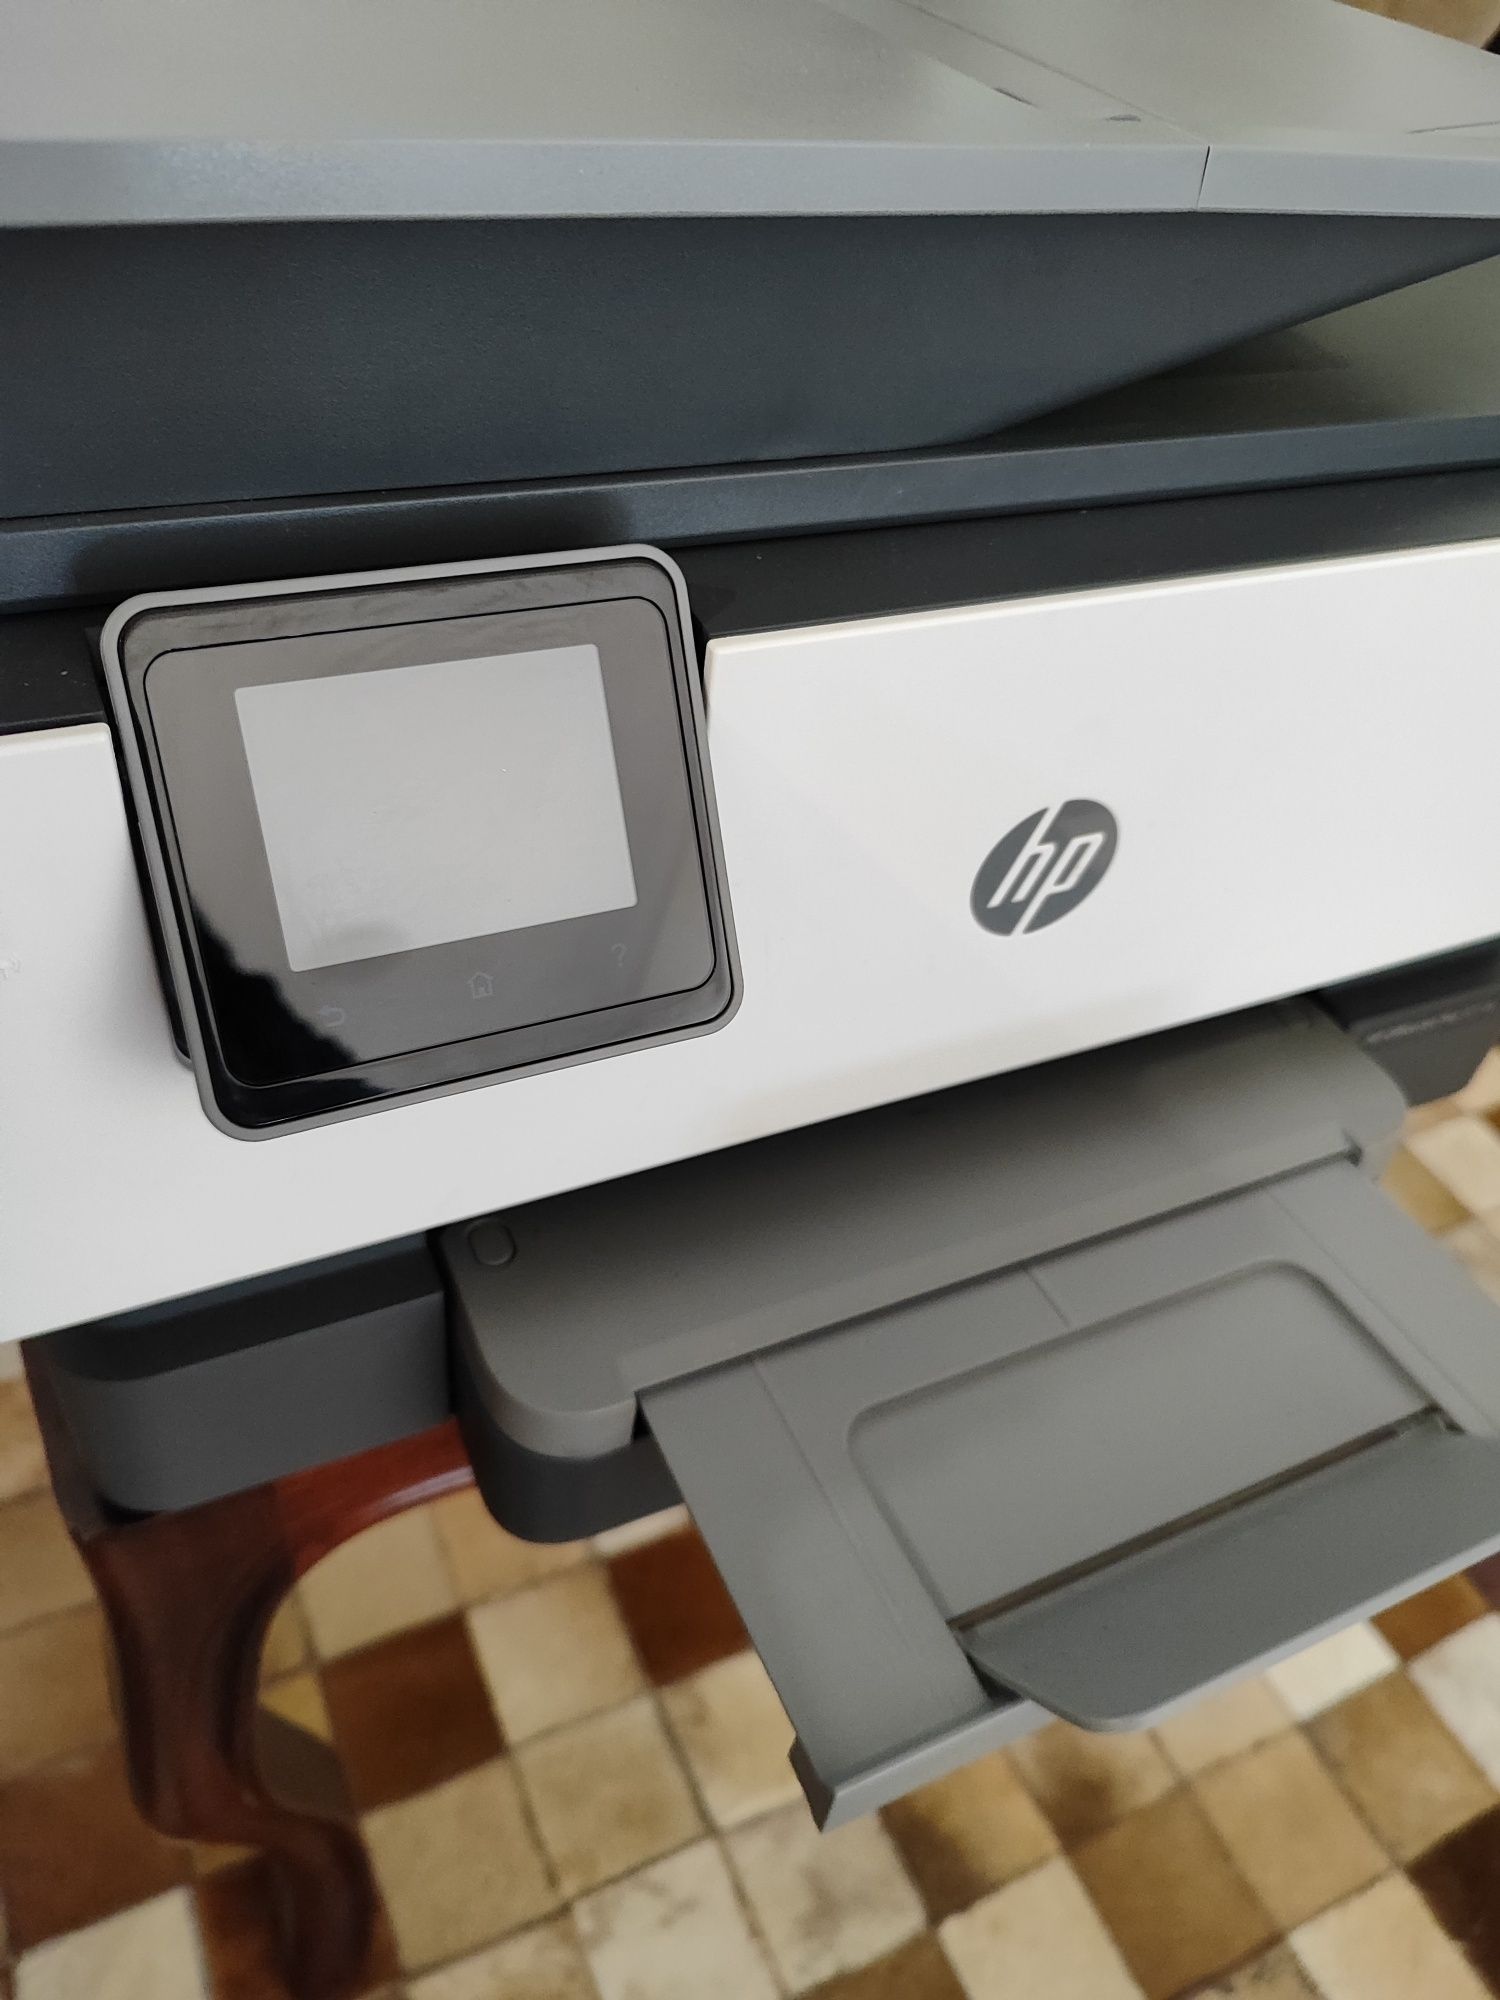 Impressora Multifunções HP OfficeJet Pro 9014e